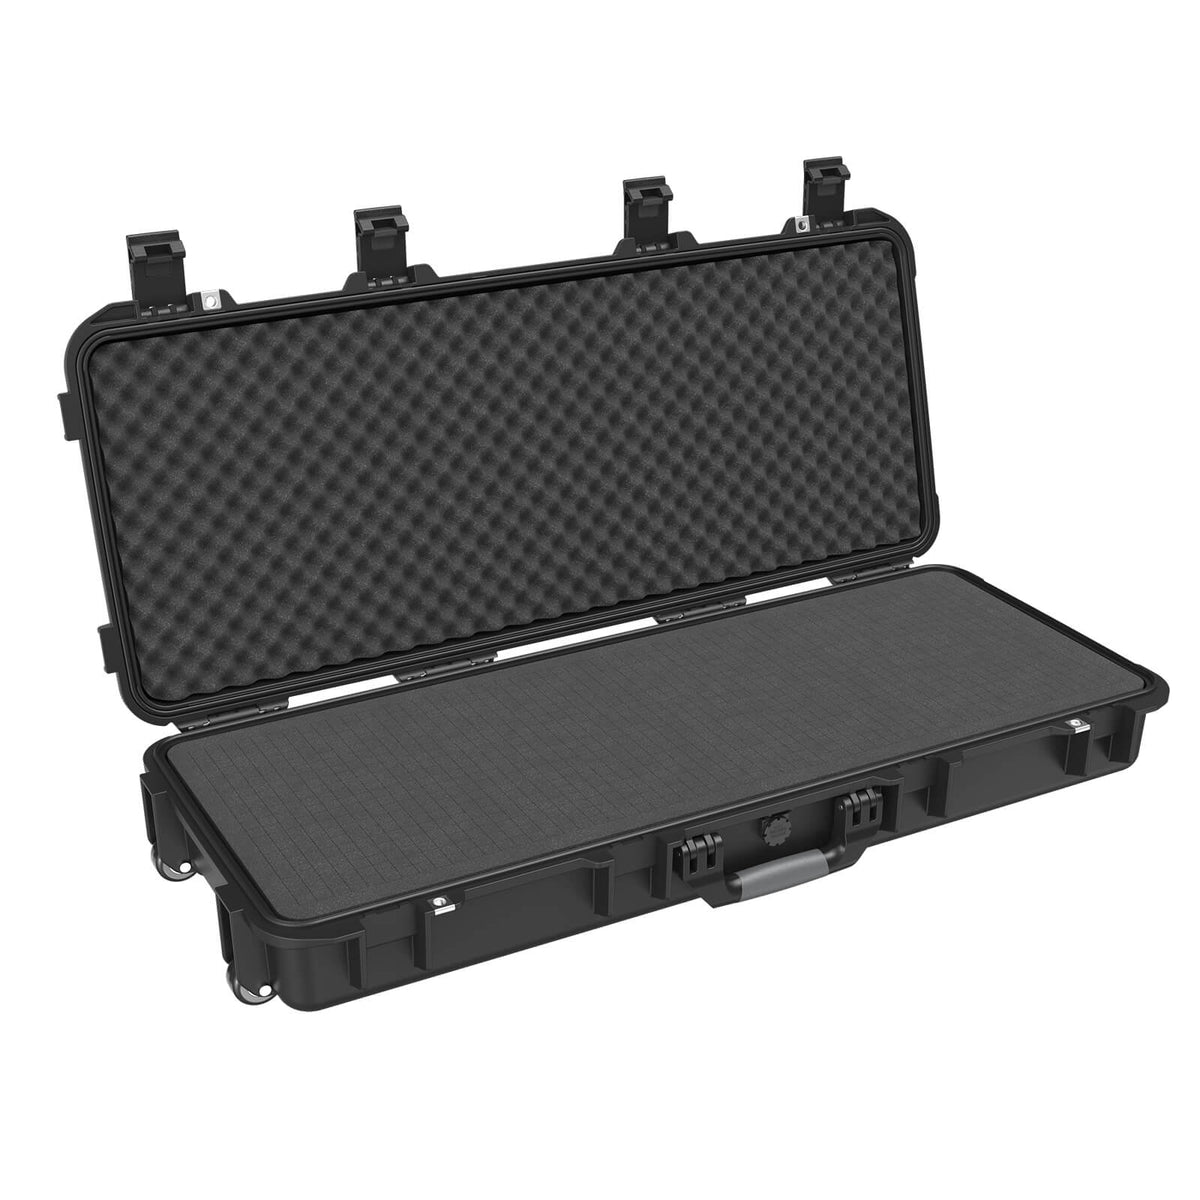 RPNB Weatherproof Protective Case with Customizable Foam Insert, Premium Black Hard Case, PP-91139